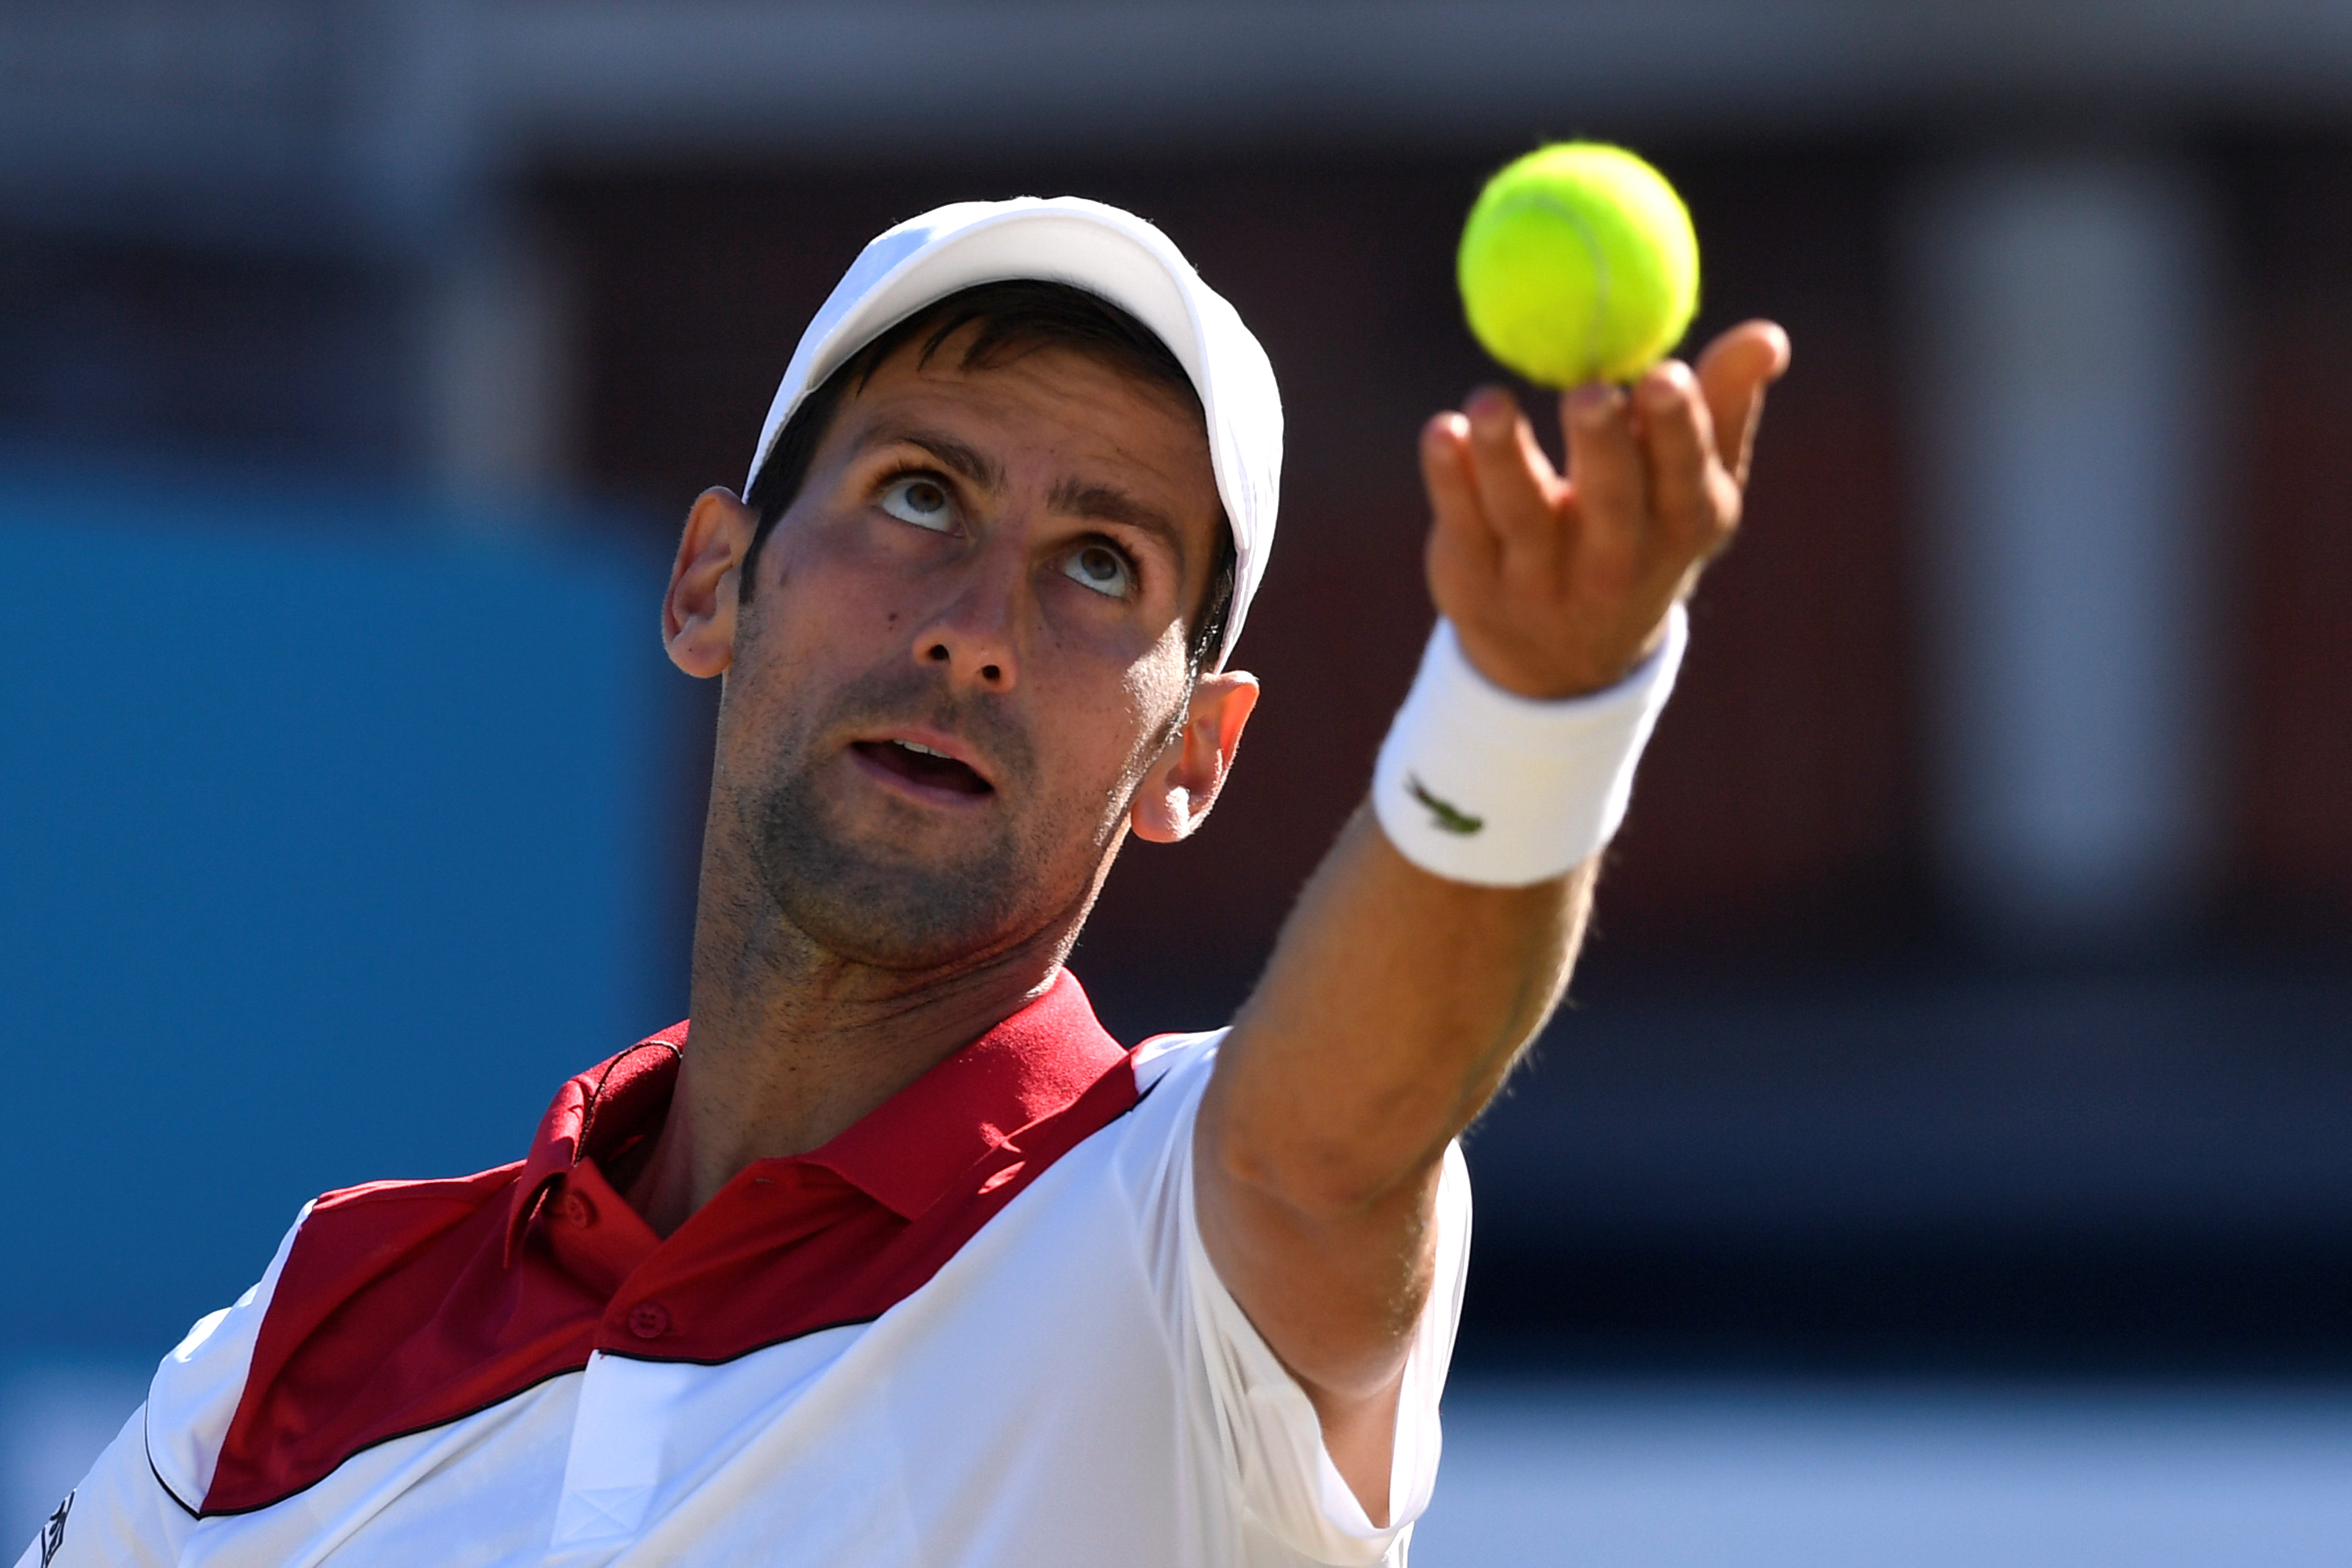 Tennis: No limits says Djokovic as he reaches 800 wins milestone